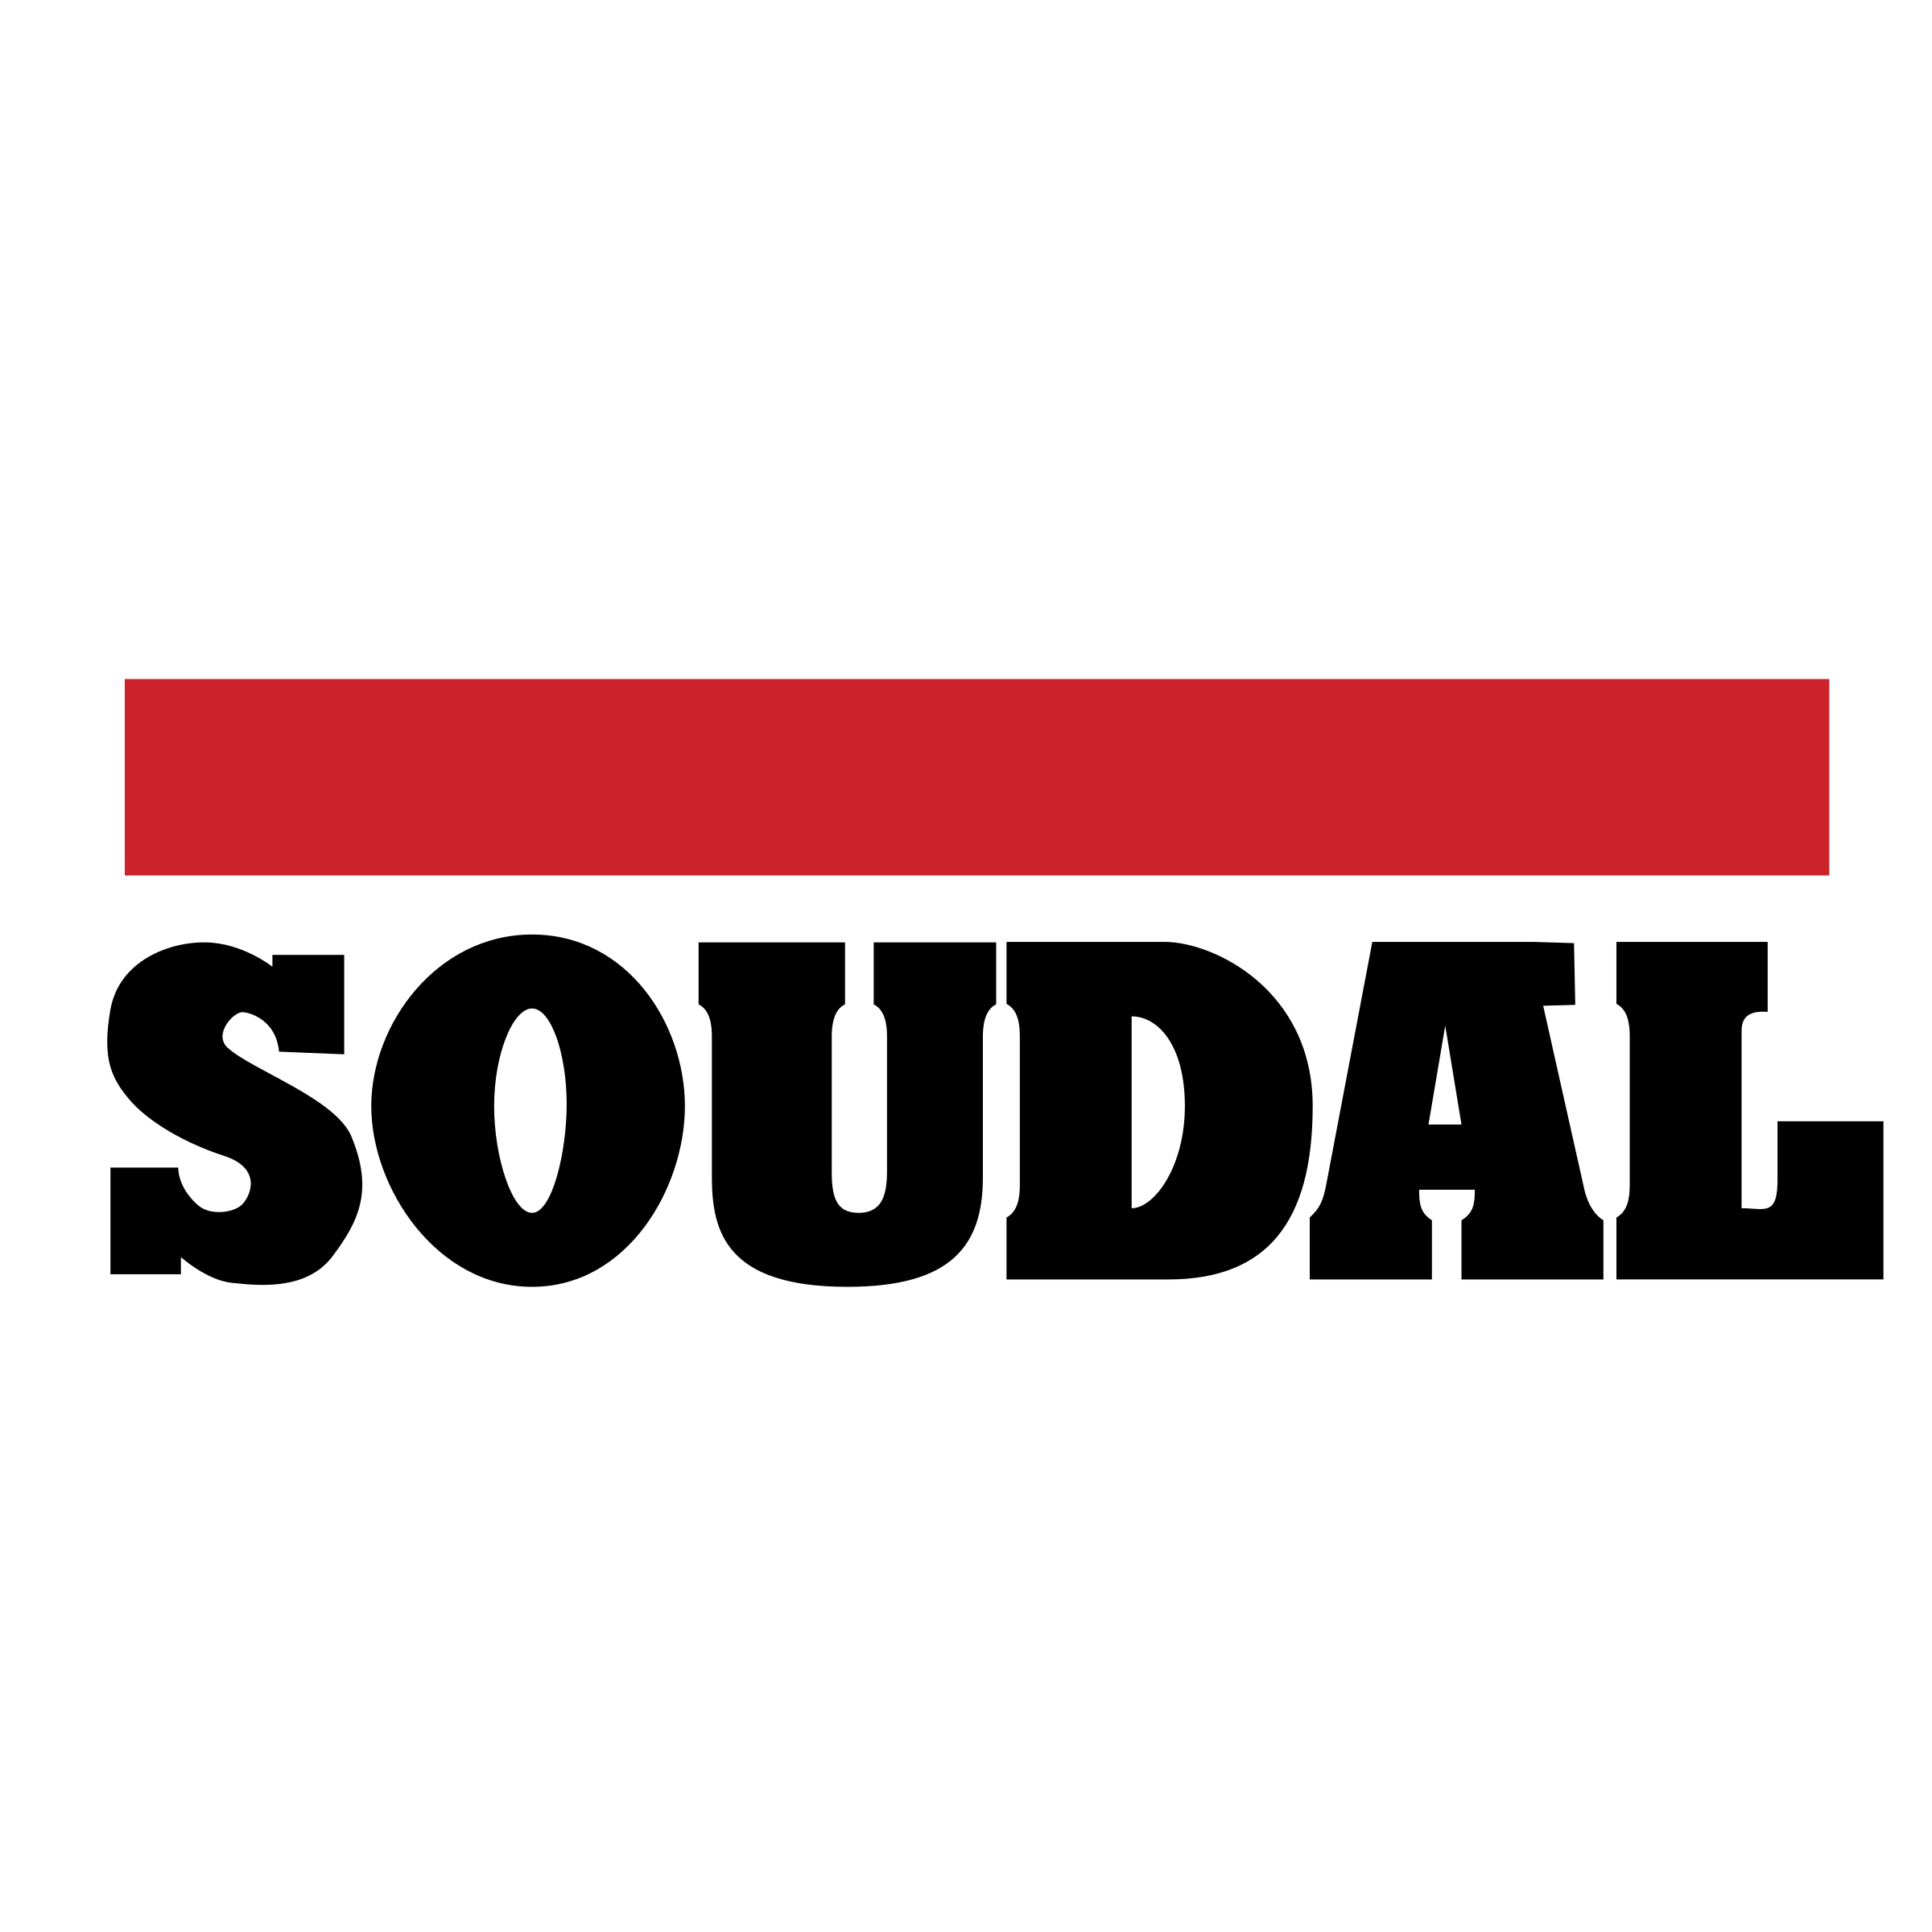 soudal logo png transparent